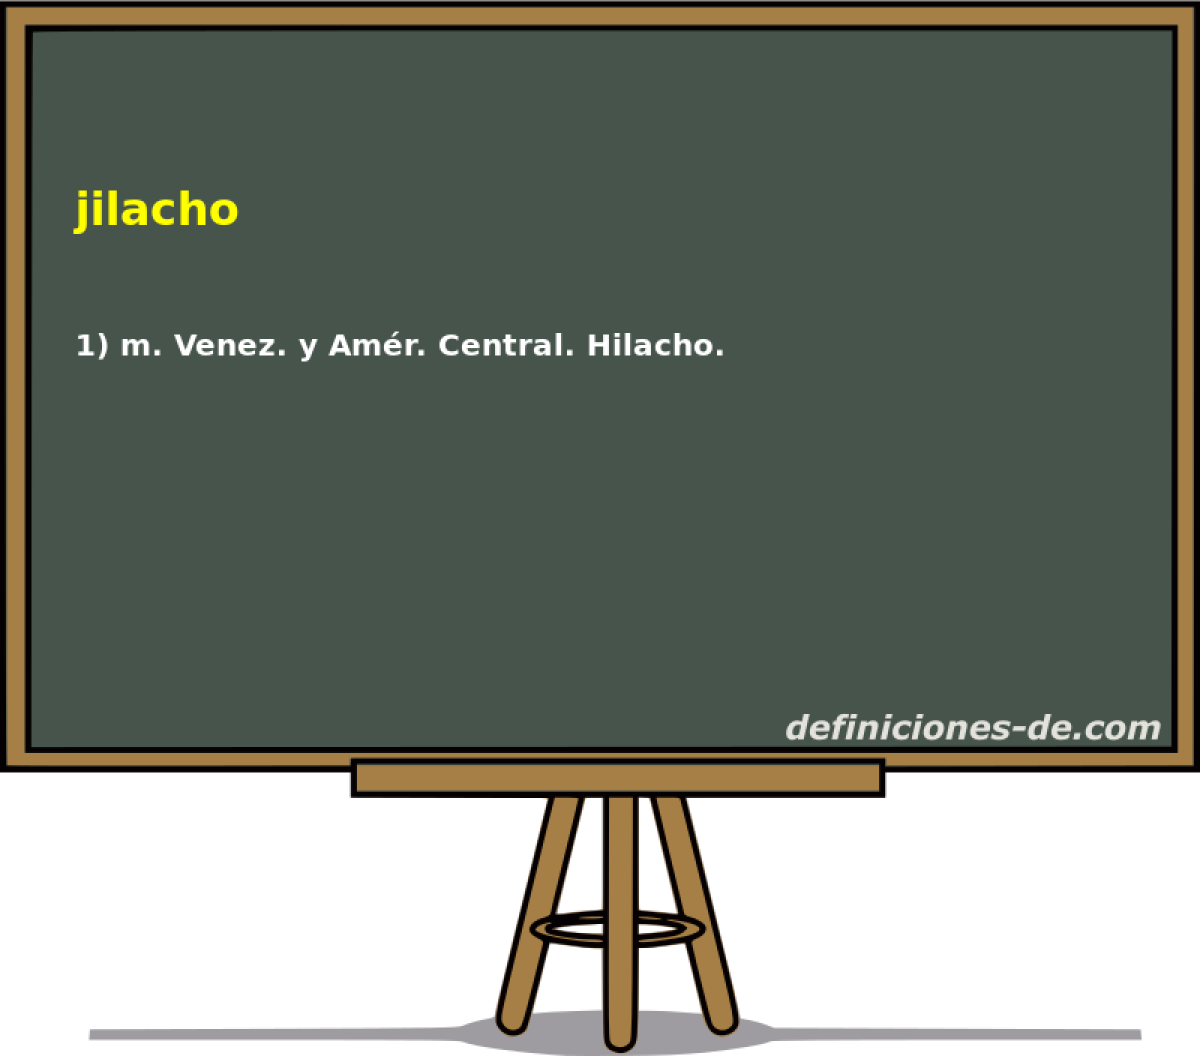 jilacho 